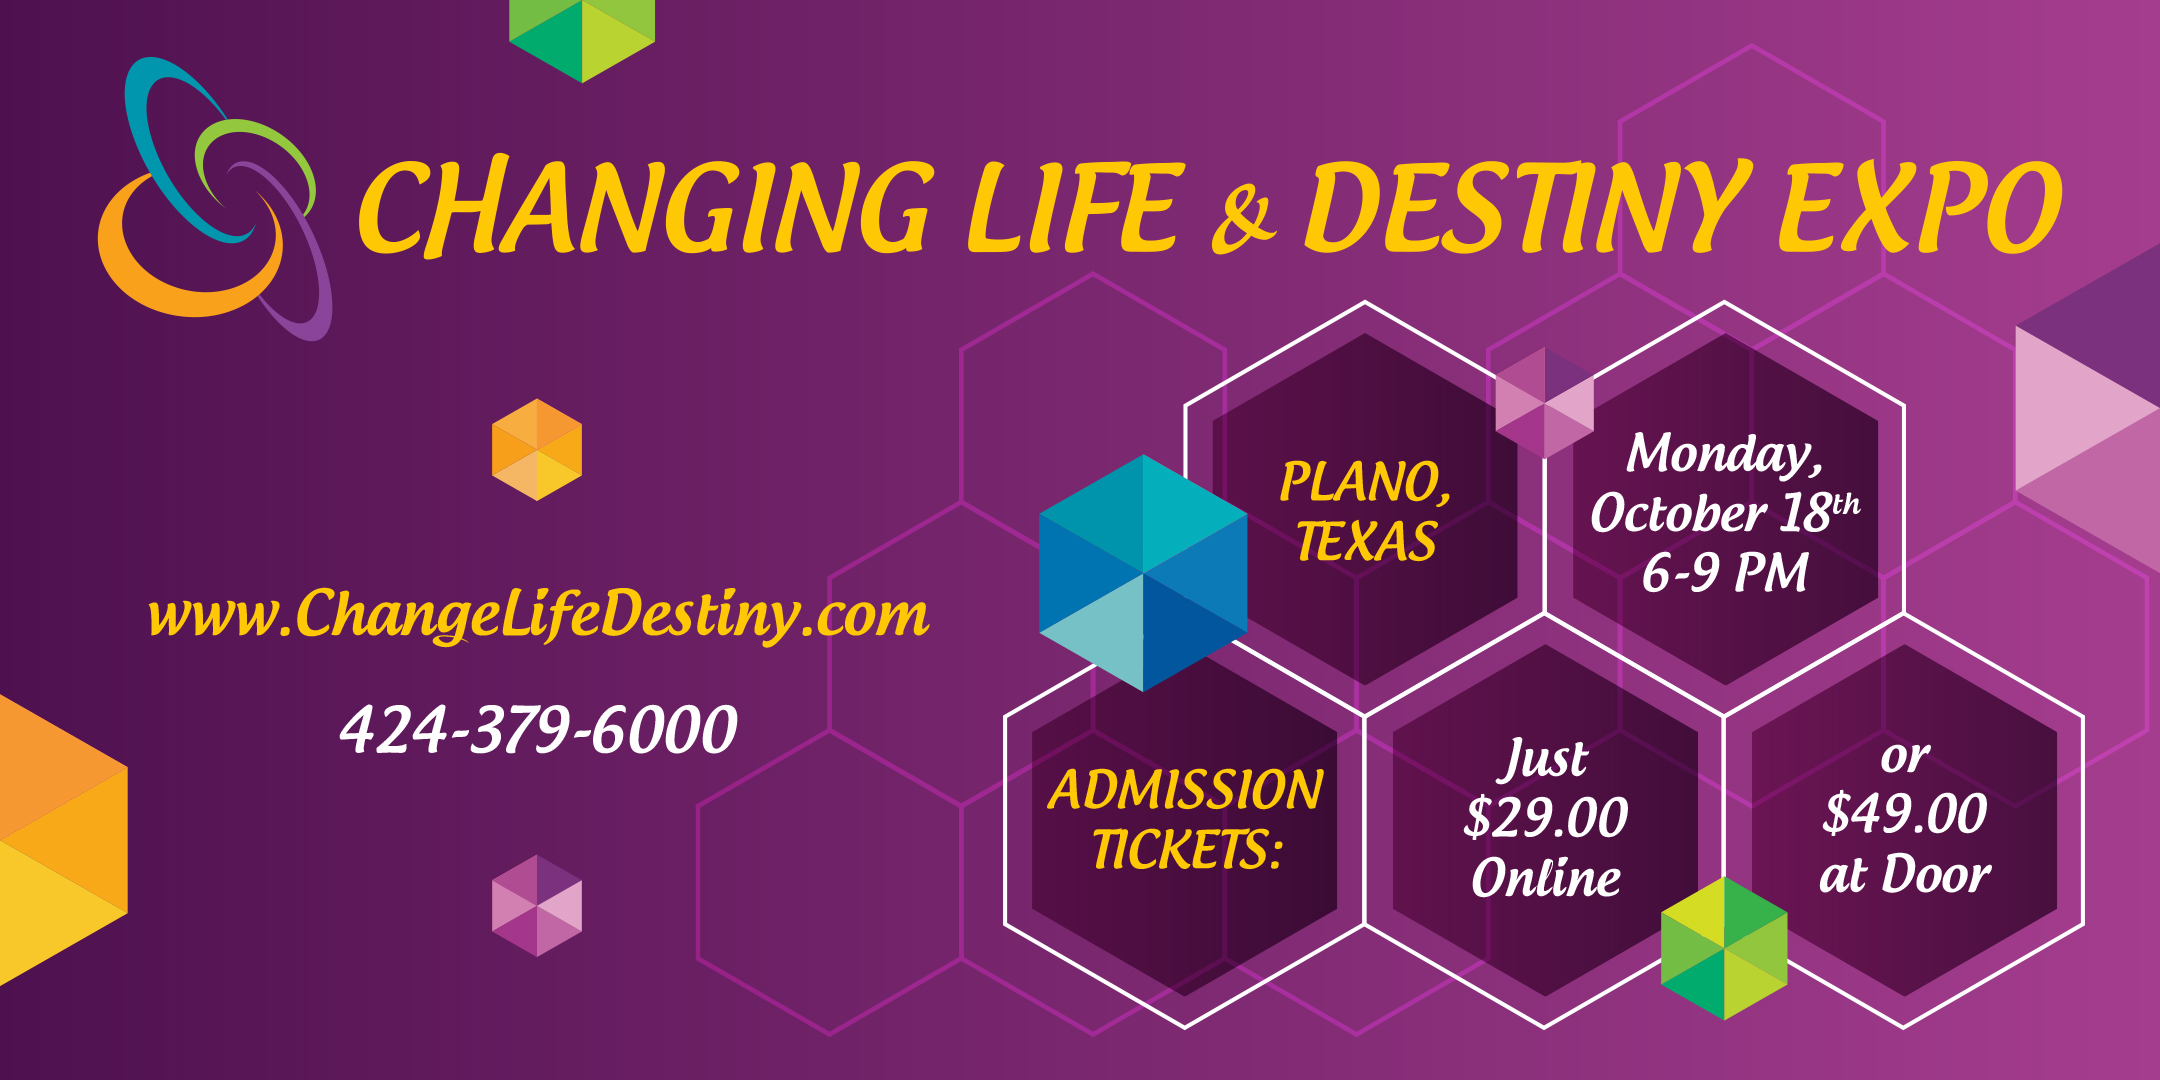 Changing Life & Destiny Expo